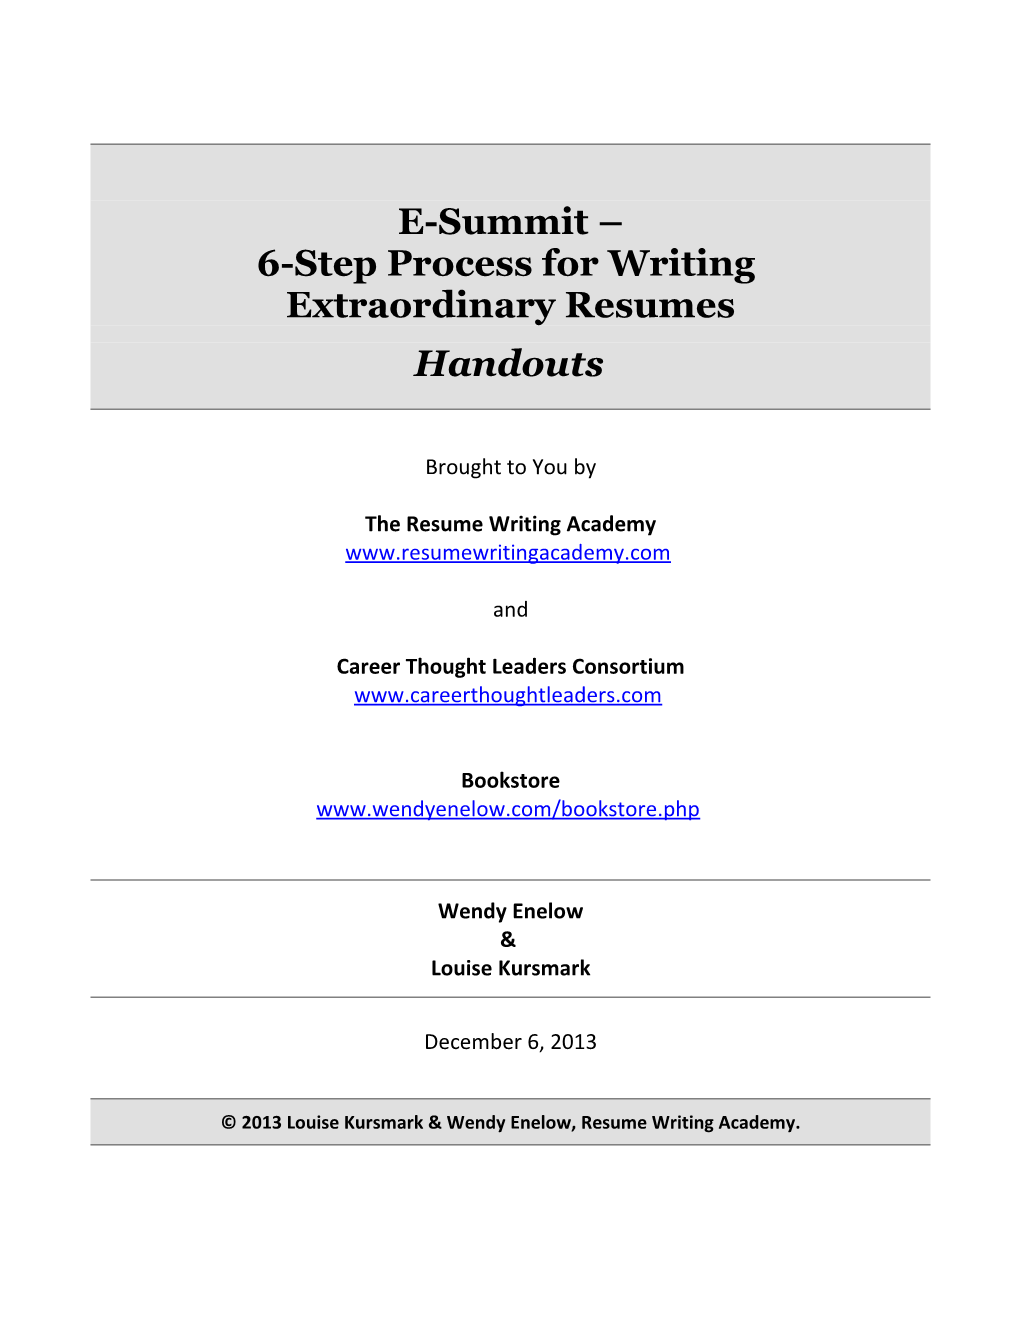 The Resume Writing Academy